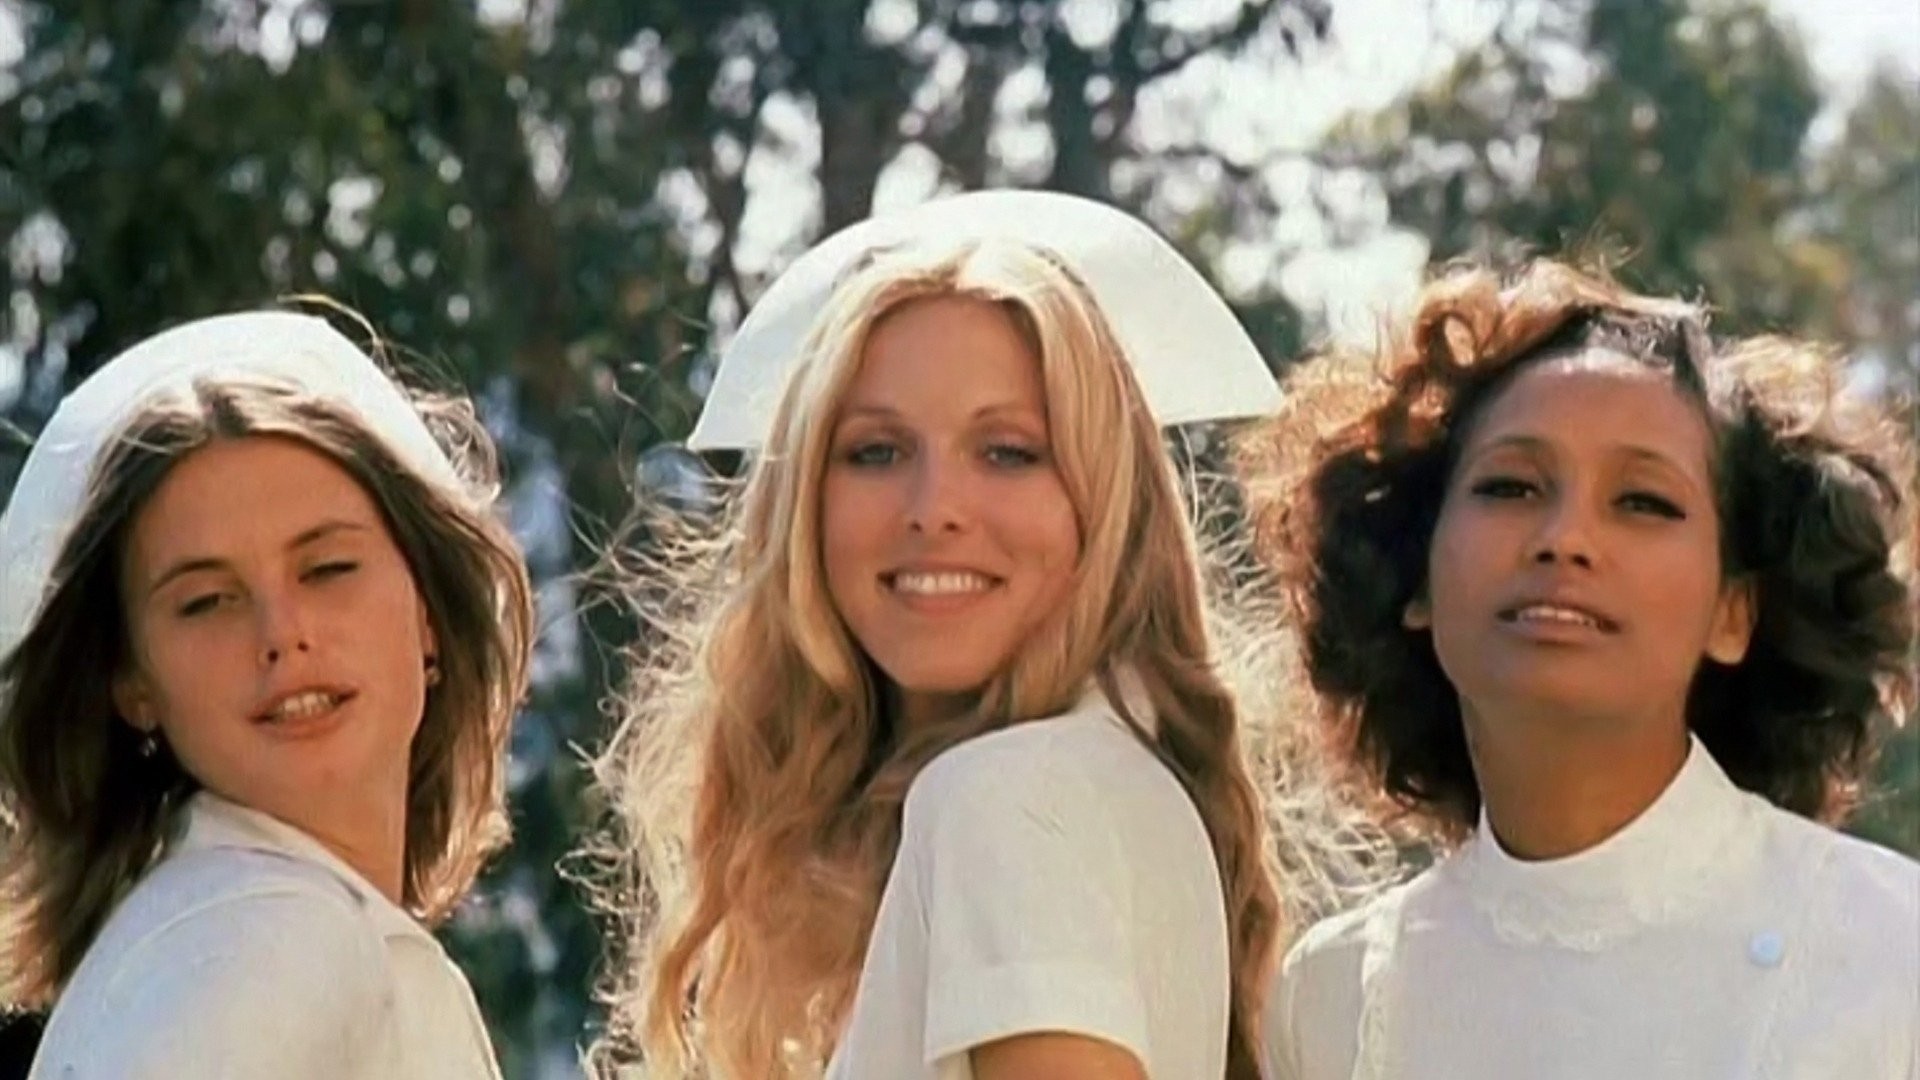 Film Review – Night Call Nurses (1972) – Spoilers